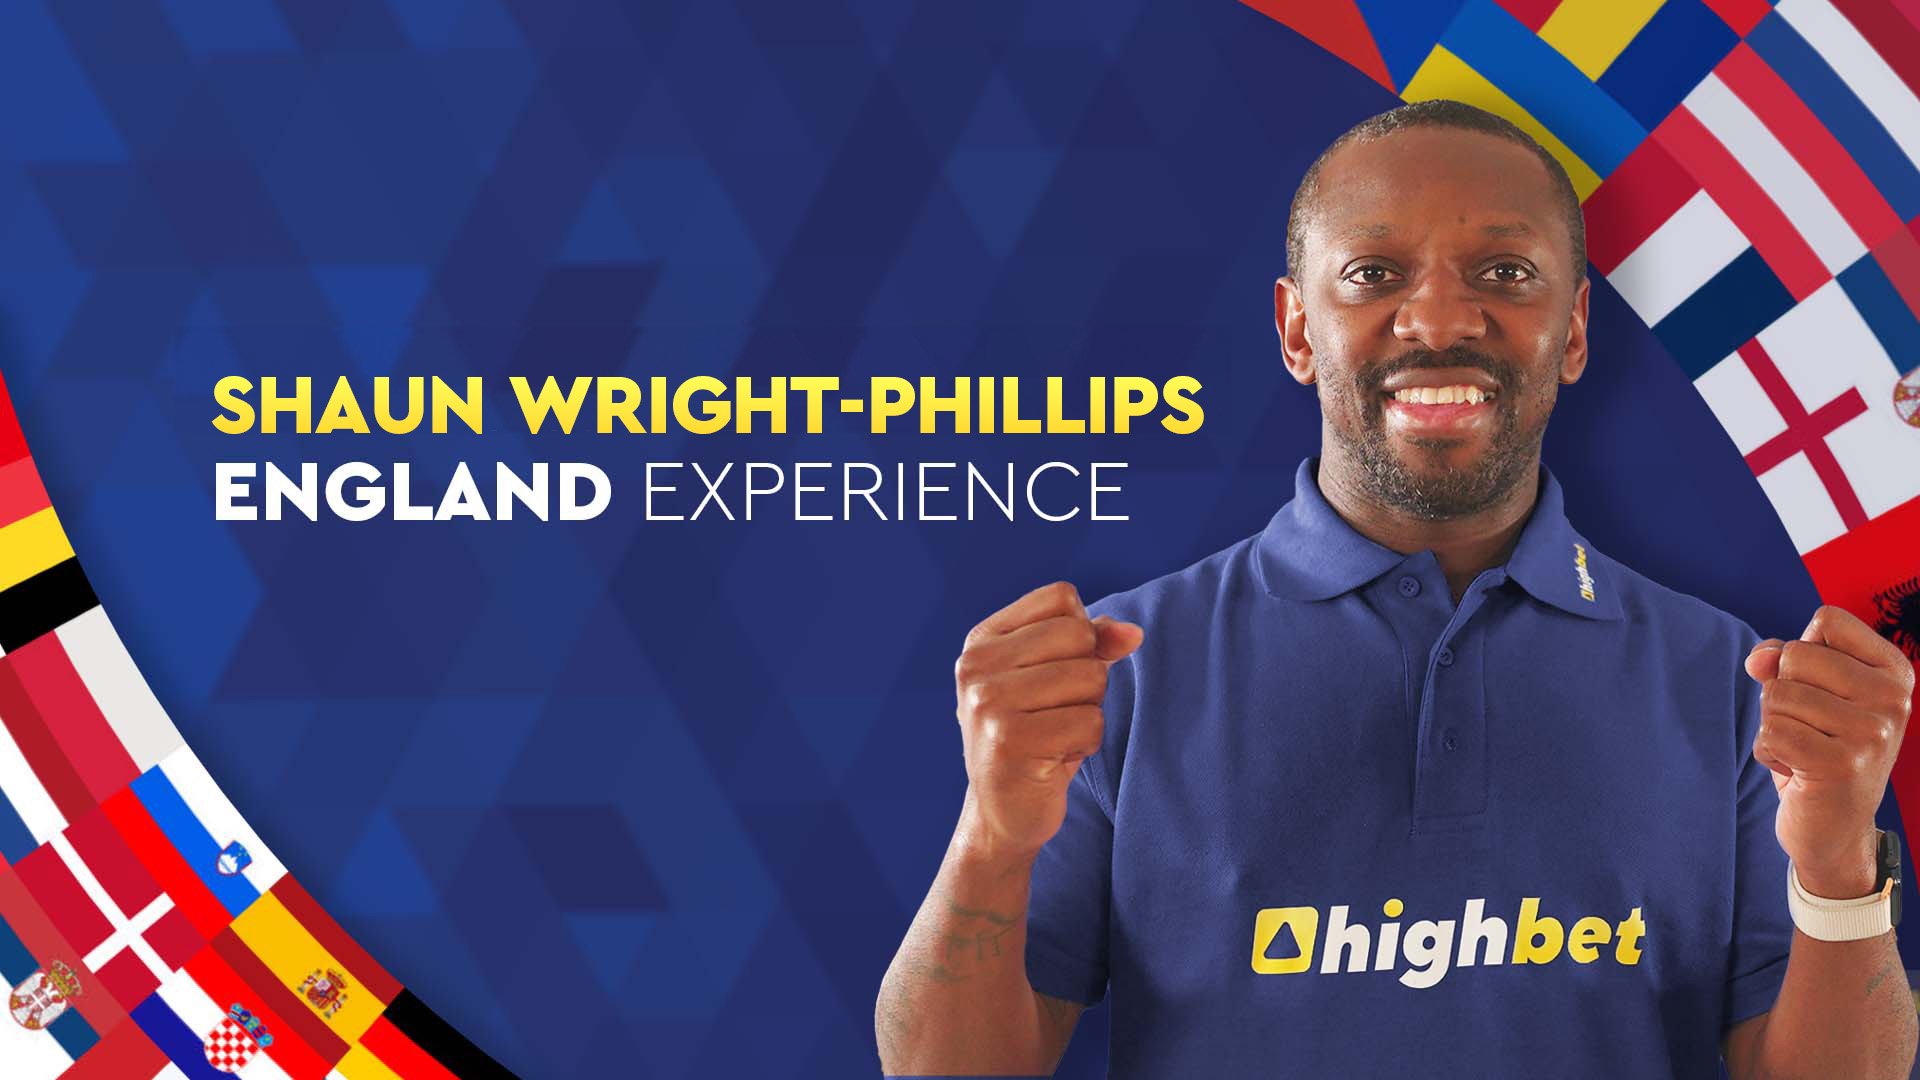 Video: Shaun Wright-Phillips - England Experience